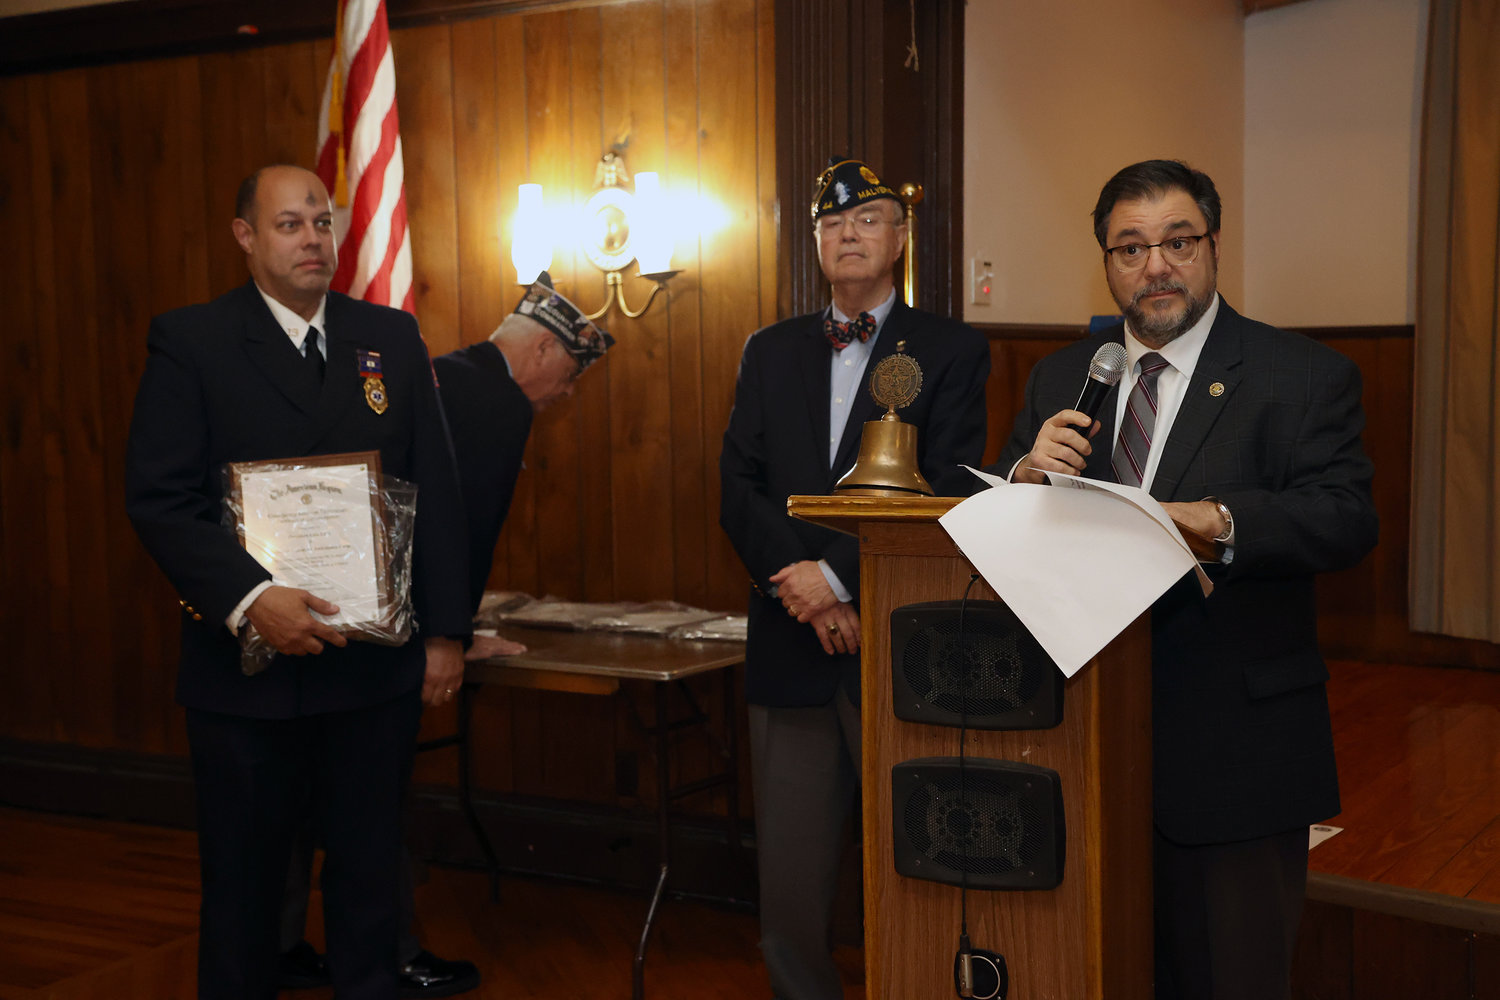 Deputy Mayor Perry Cuocci presents the Volunteer Ambulance Corp. Award to President Luis Lora.